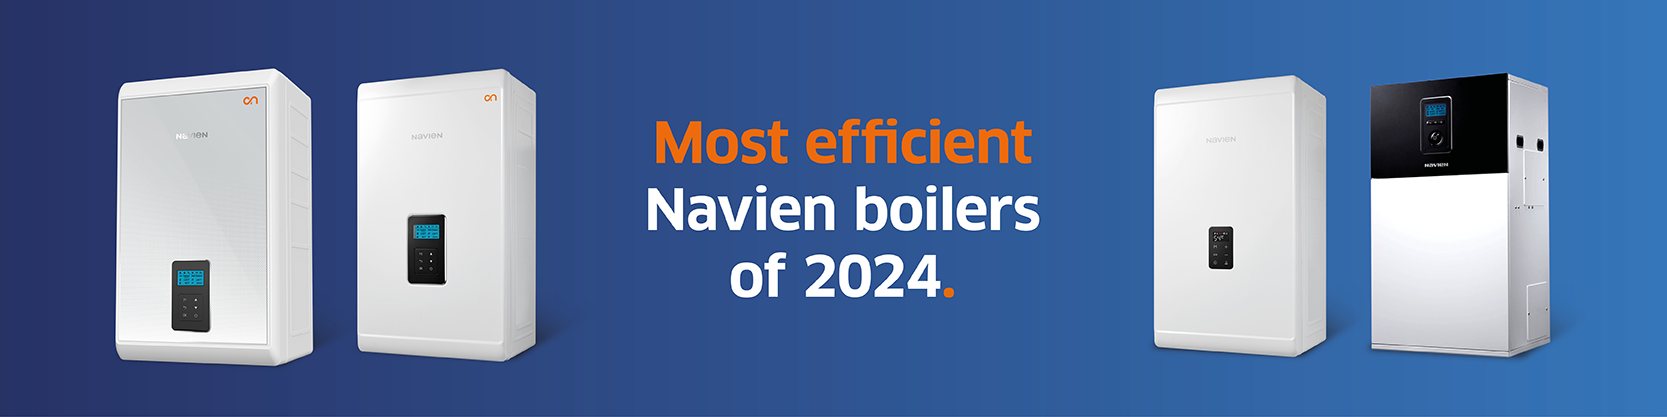 most efficient Navien boilers banner